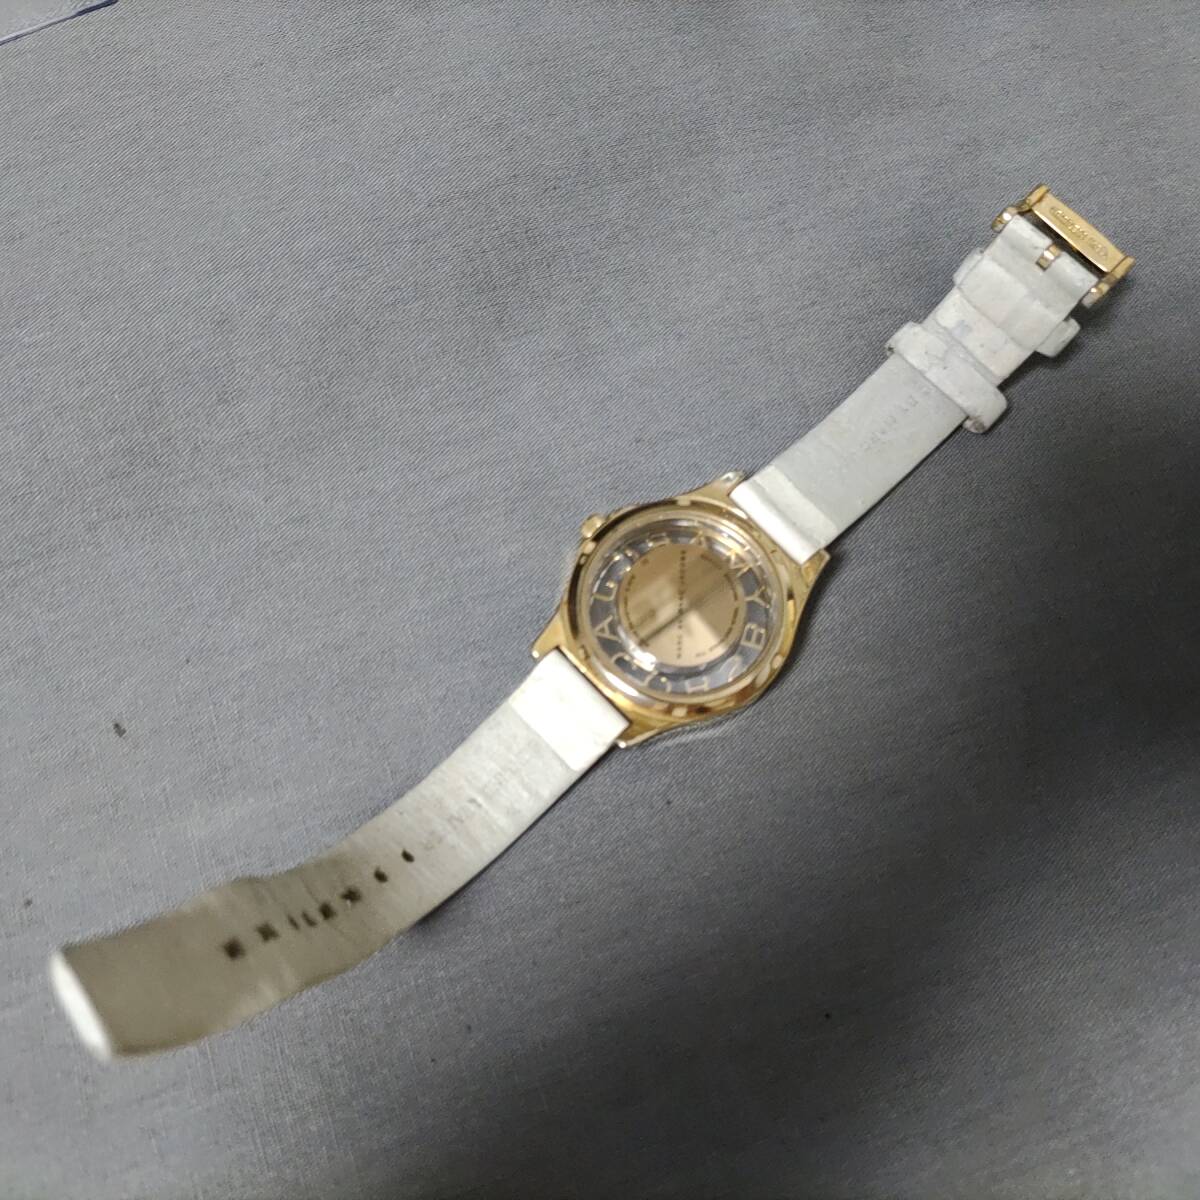 564/17 GJ60508 MARC BY JACOBS MBM1339 кварц 3 стрелки Gold цвет каркас работа наручные часы Mark Jacobs 